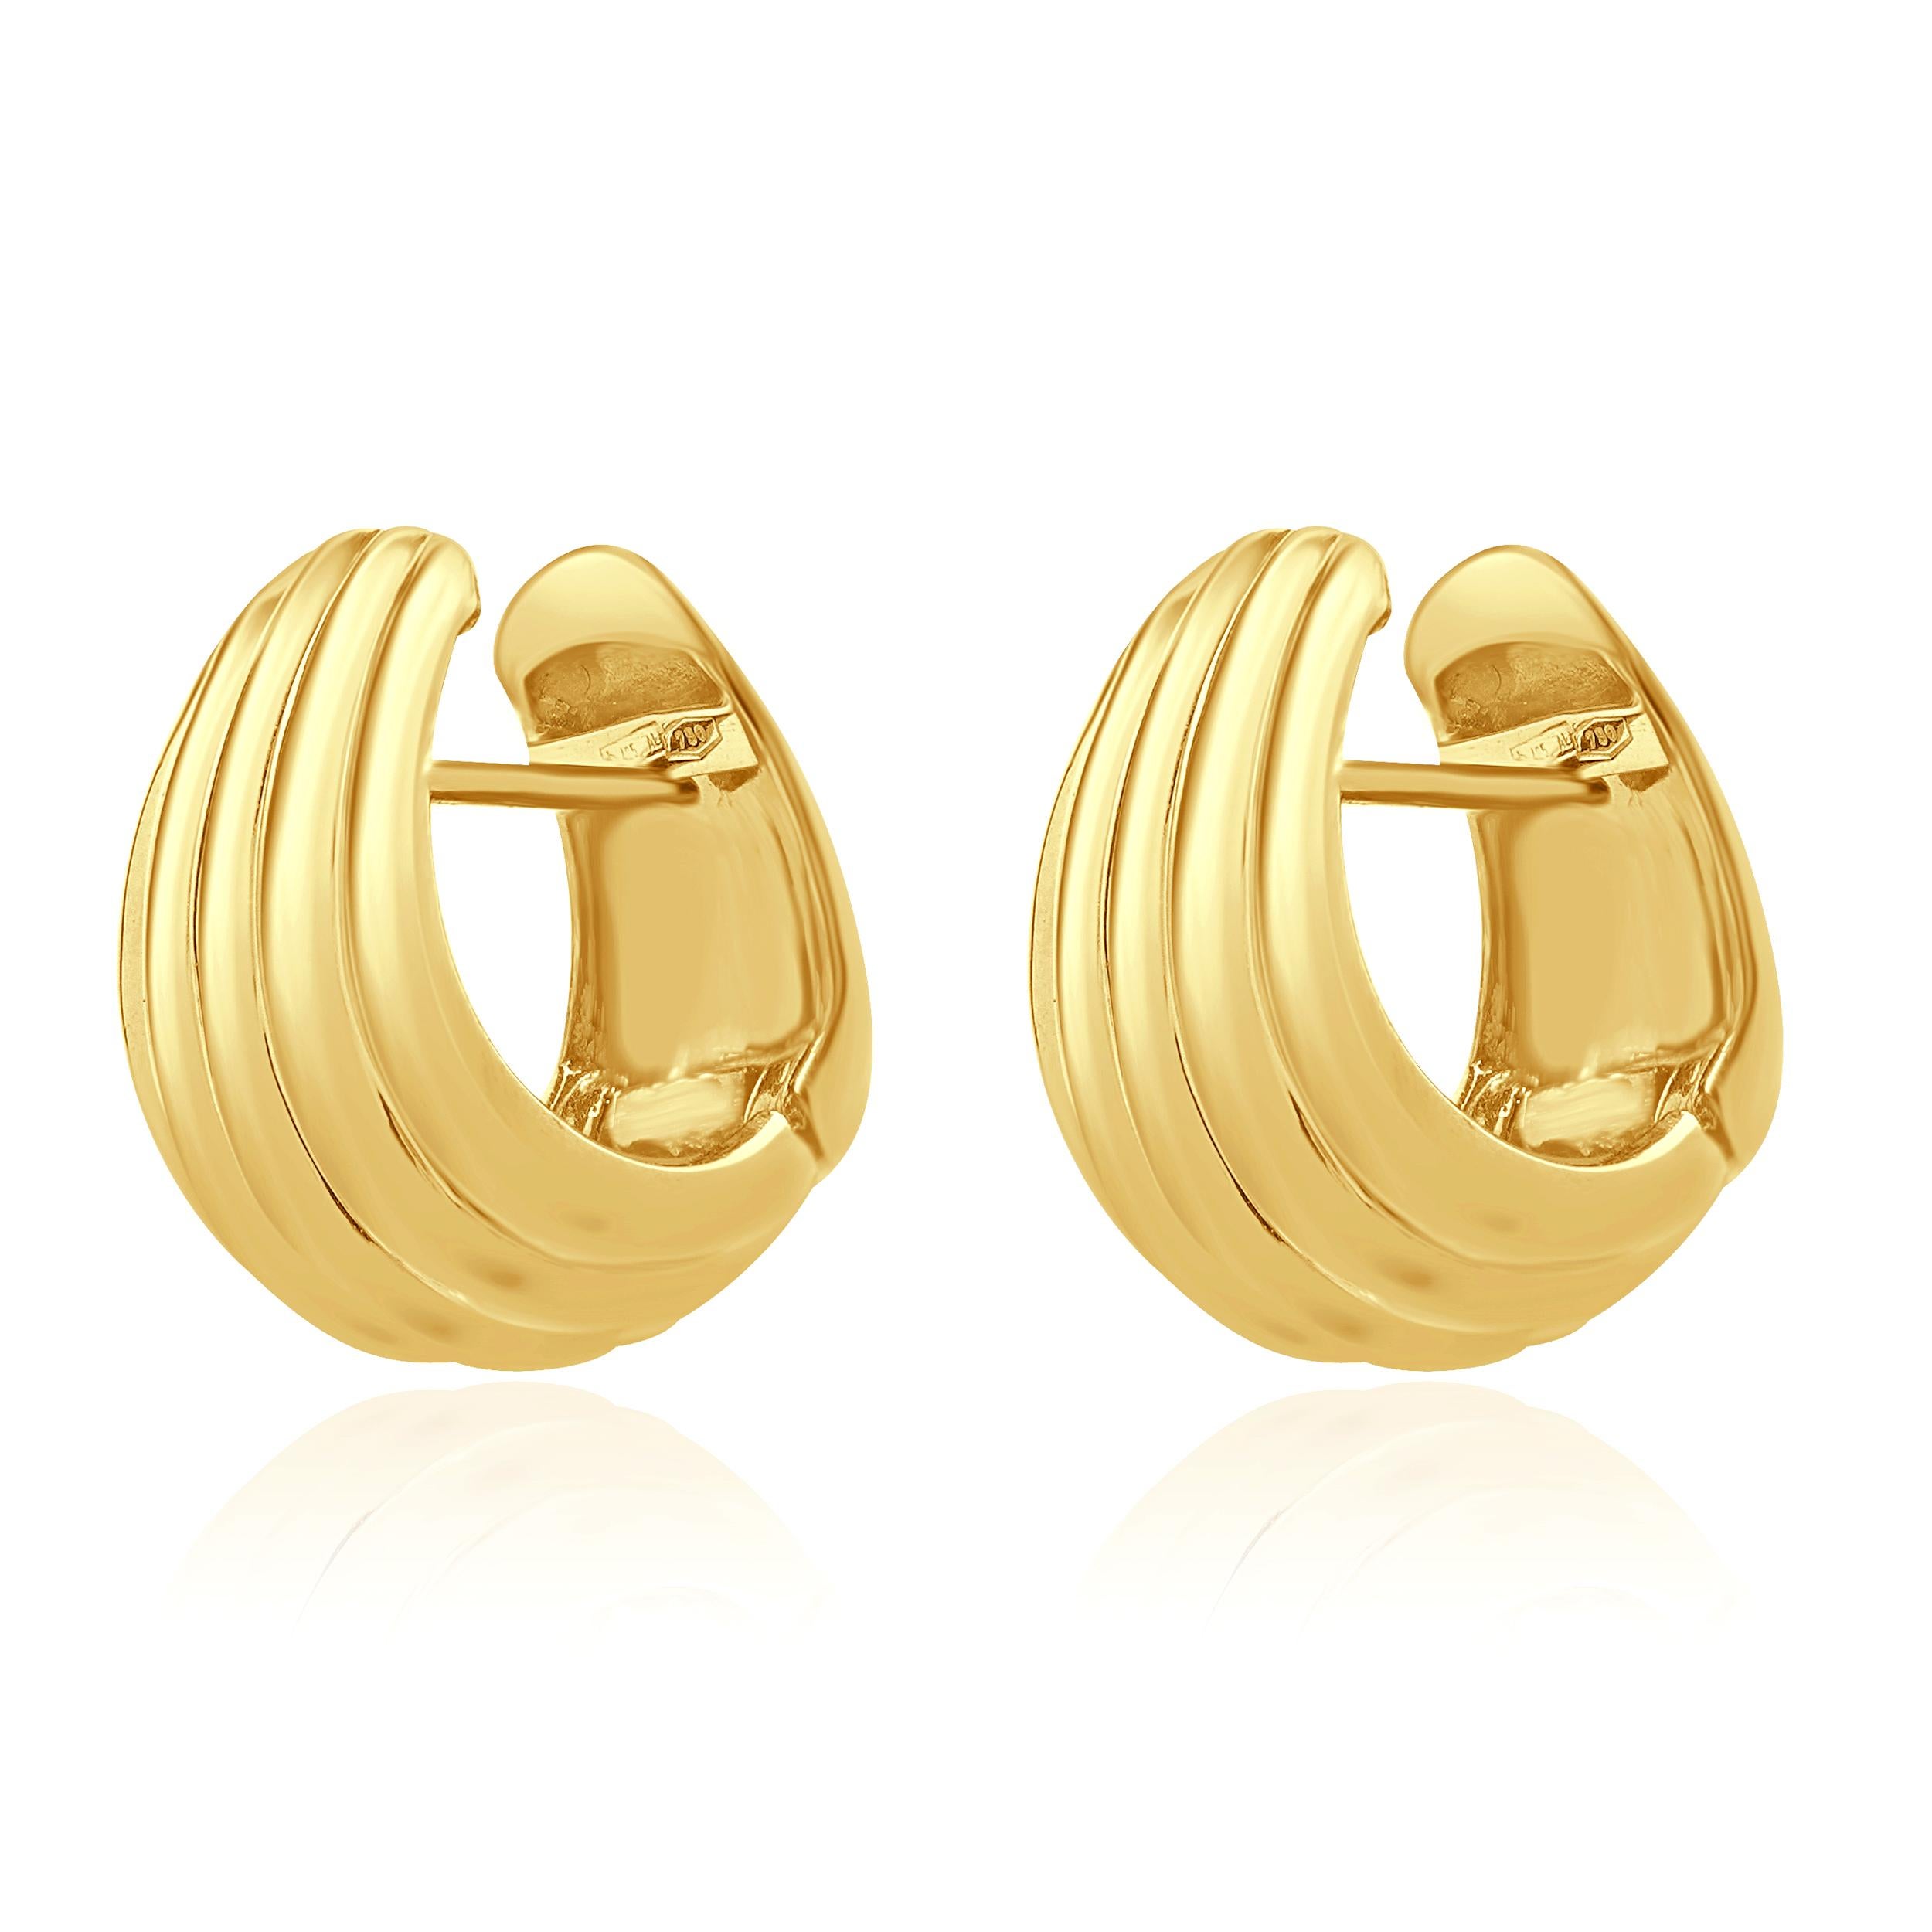 Material: 18K yellow gold
Dimensions: earrings measure 20mm
Weight:  12.07 grams
